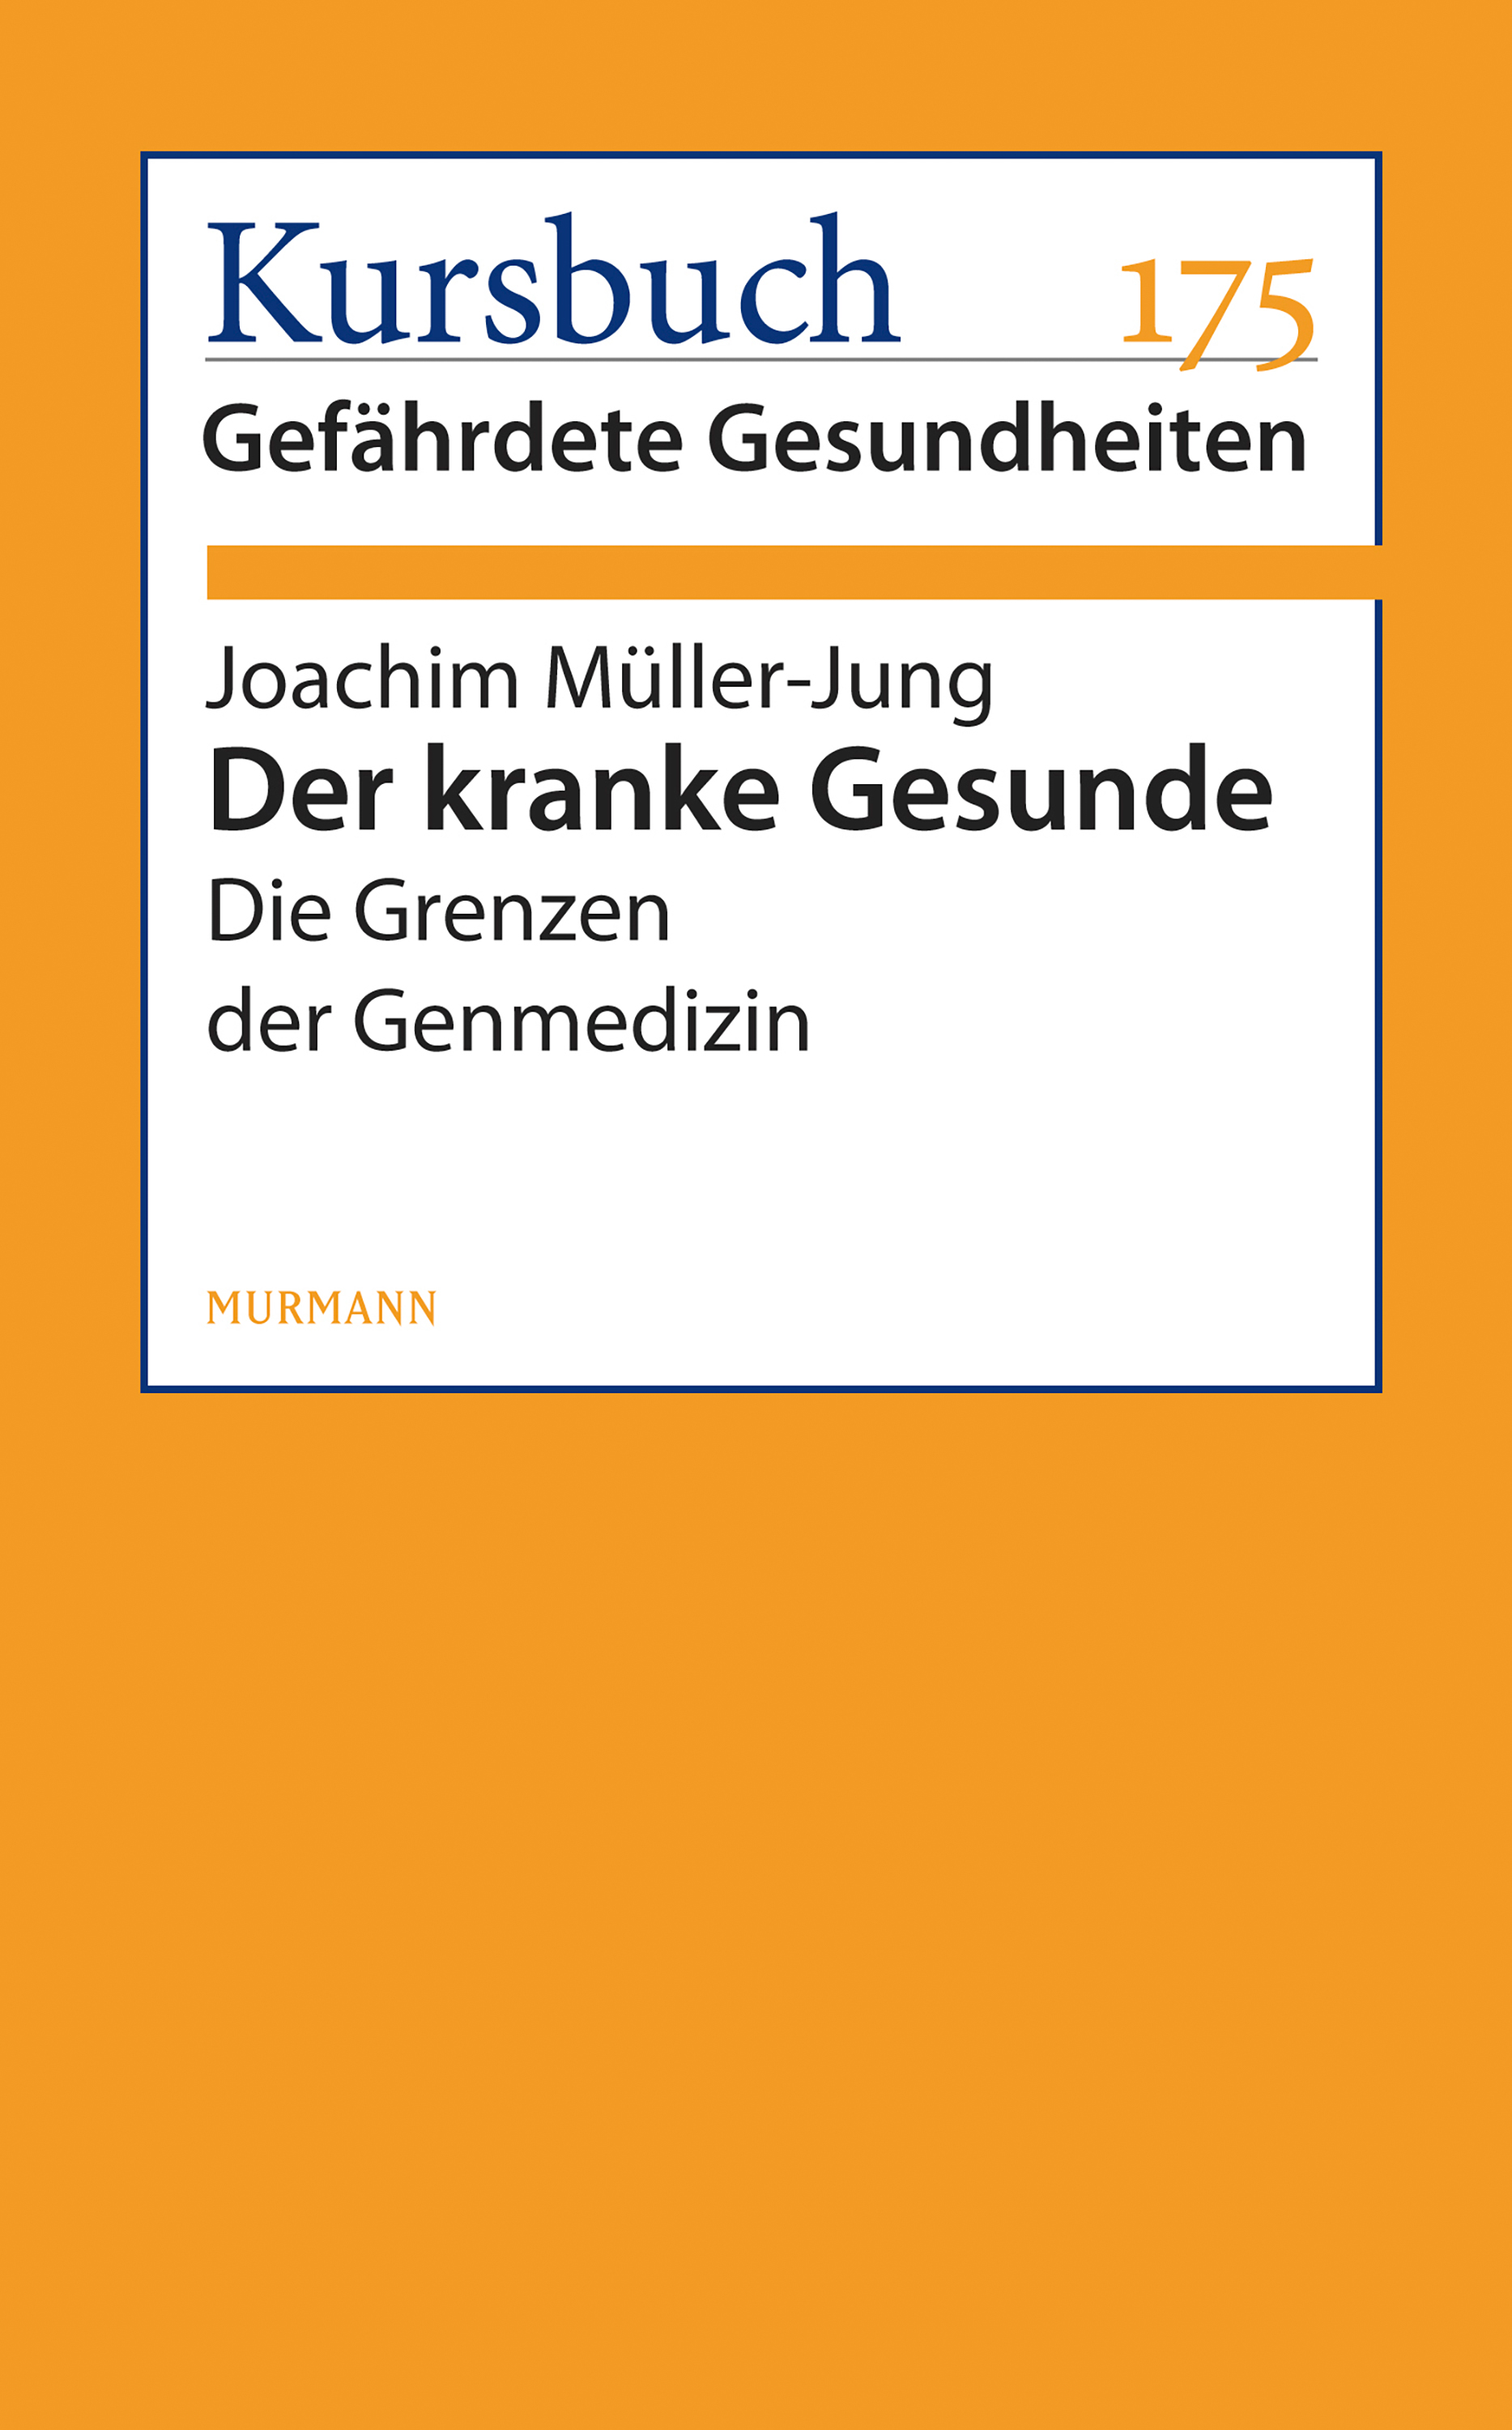 Joachim Muller-Jung Der kranke Gesunde